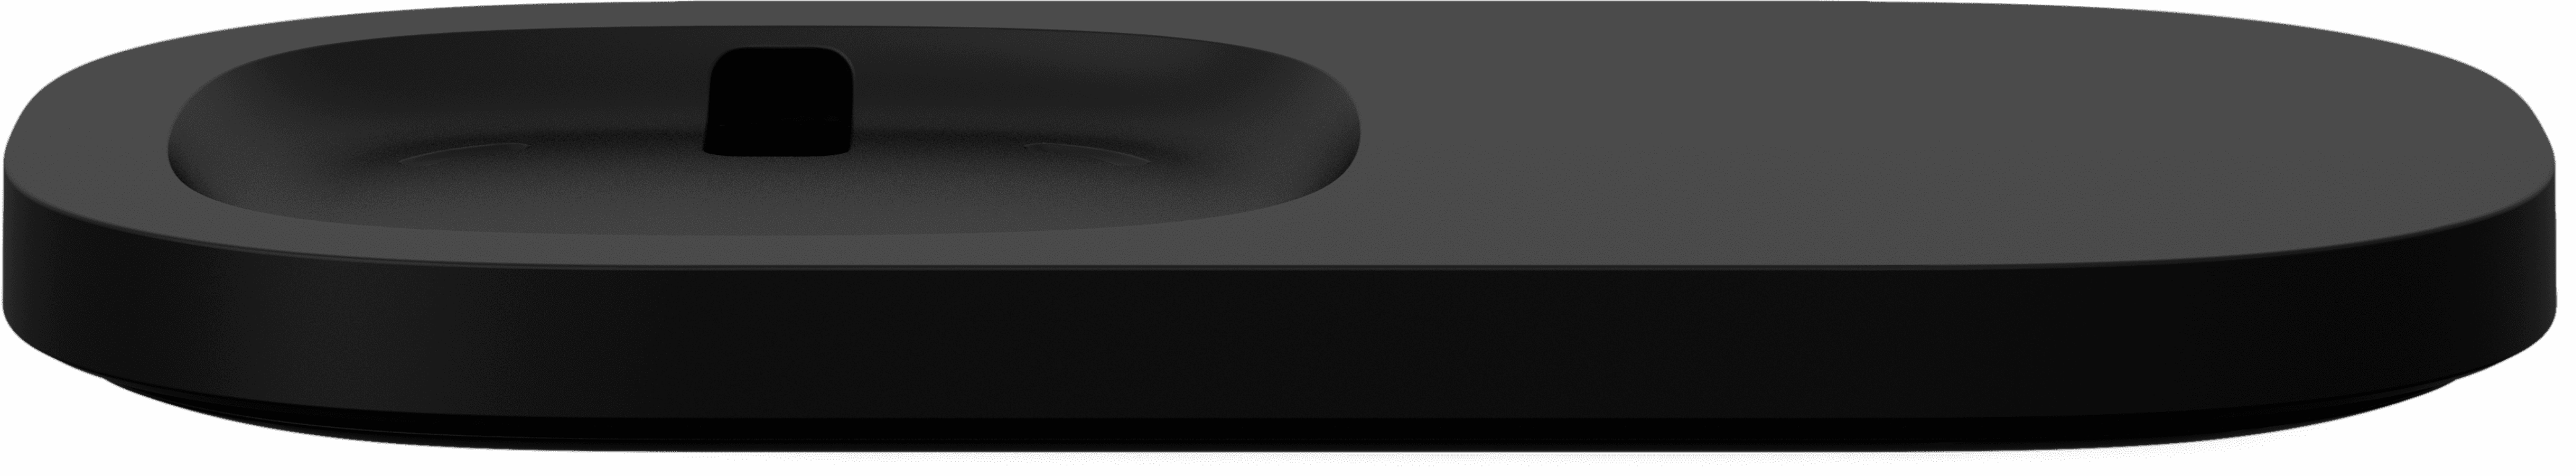 Sonos shelf noire - profil